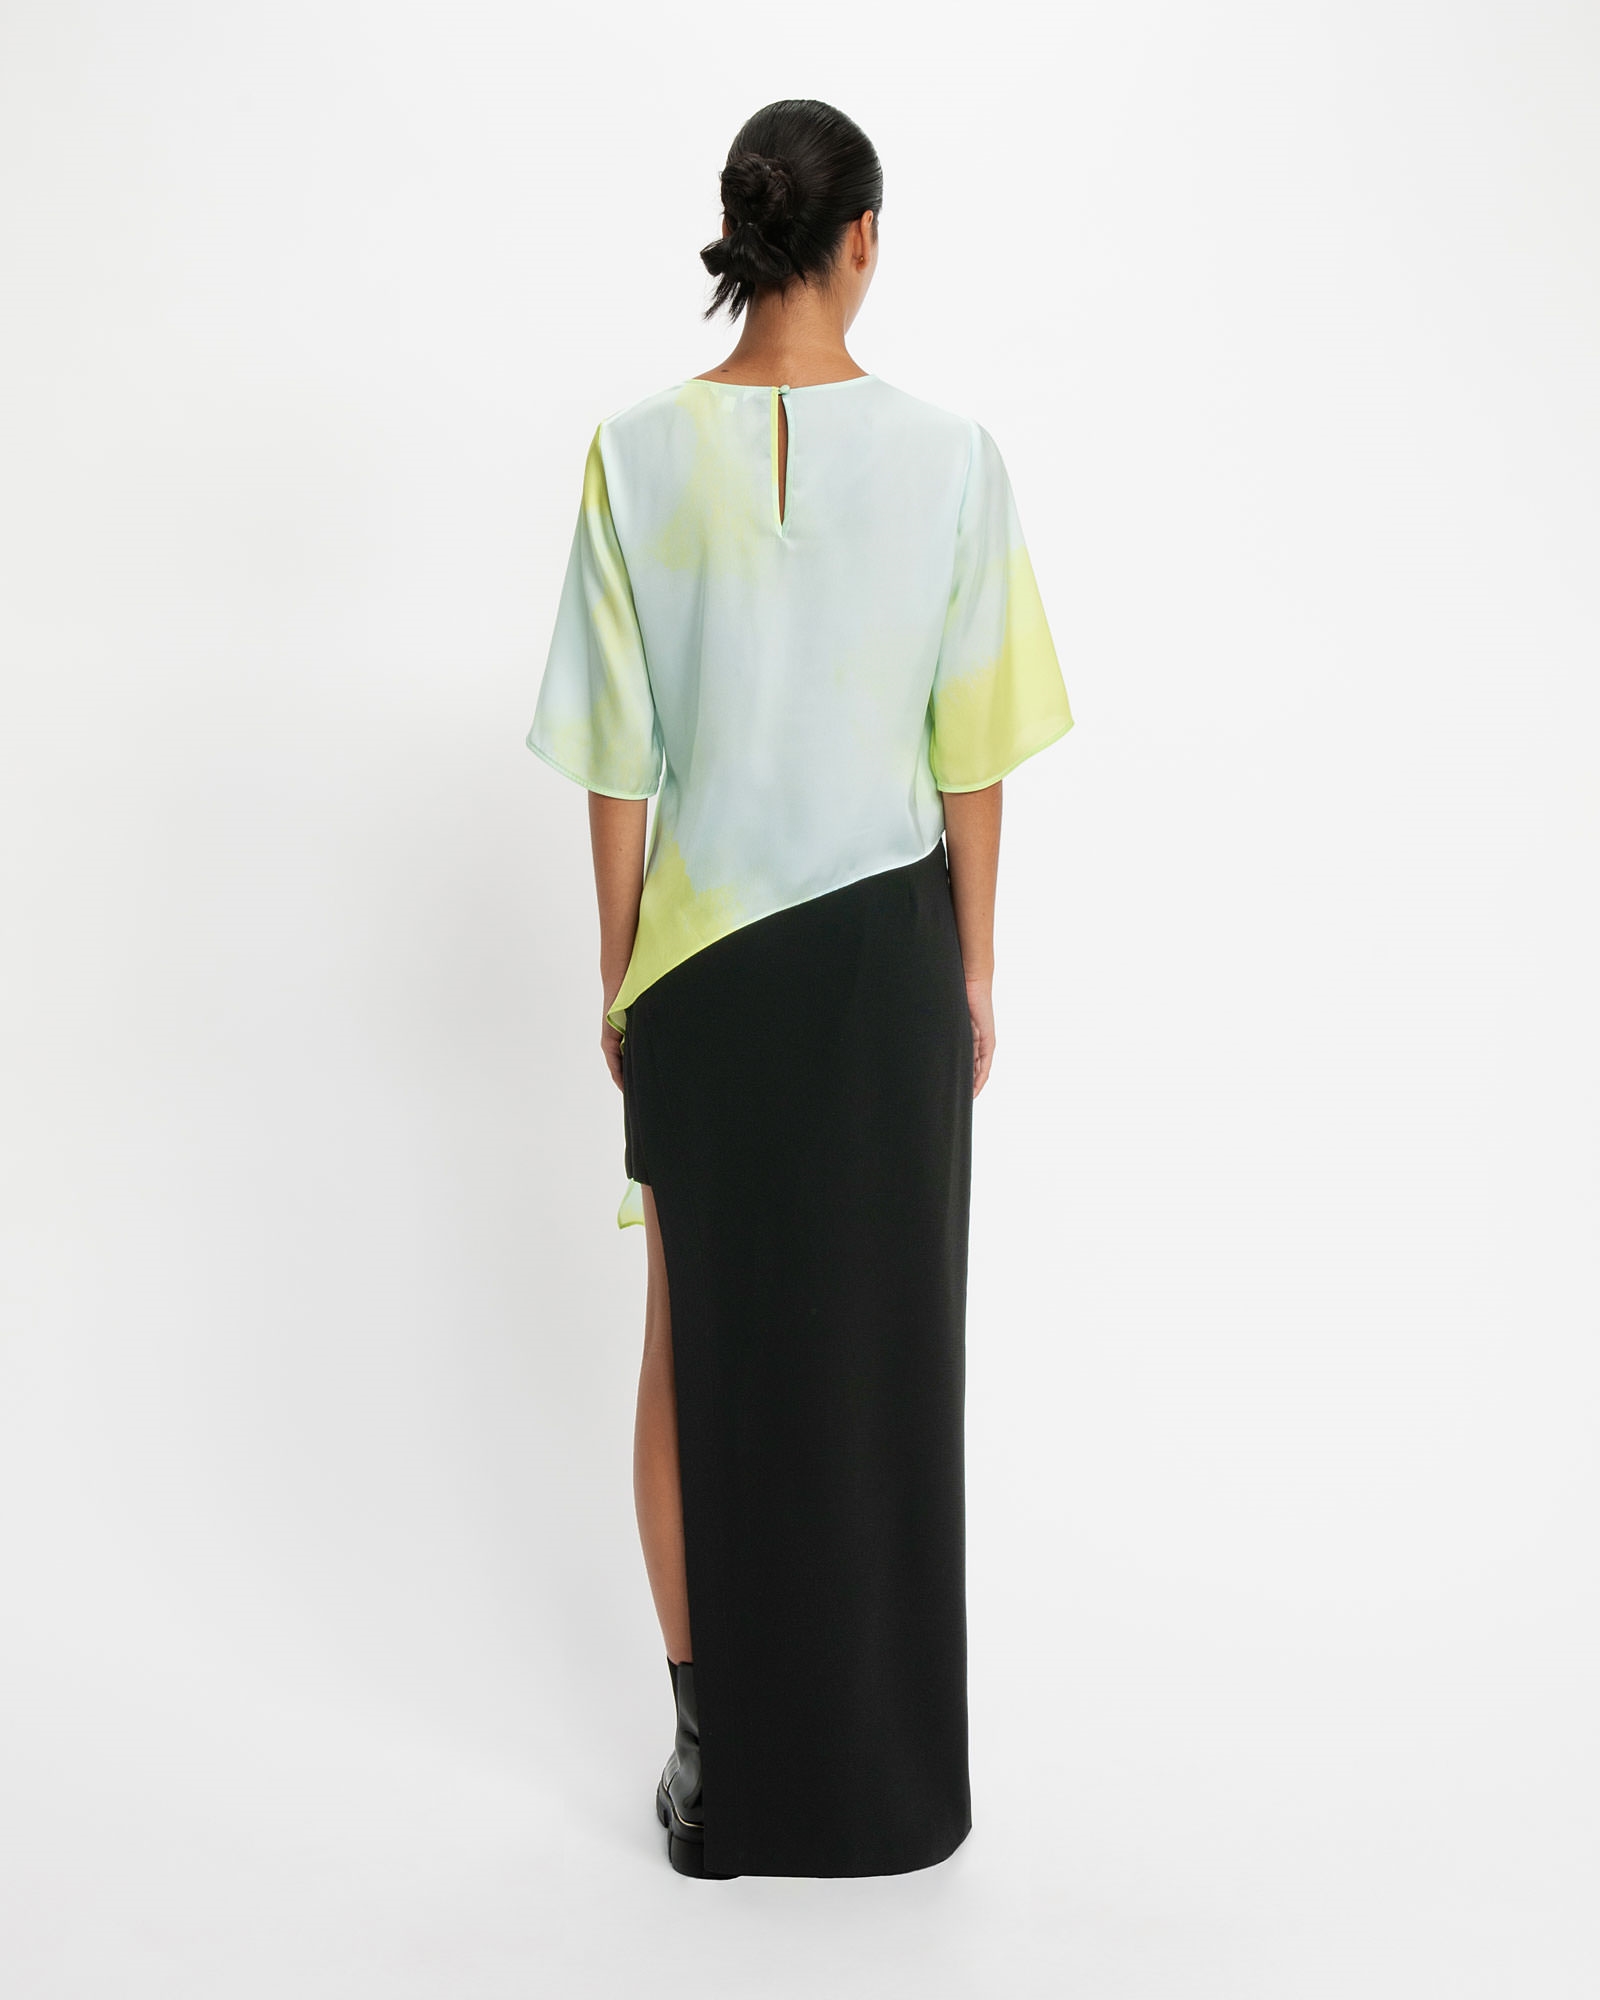 Skirts | Asymmetric Layered Skirt | 990 Black